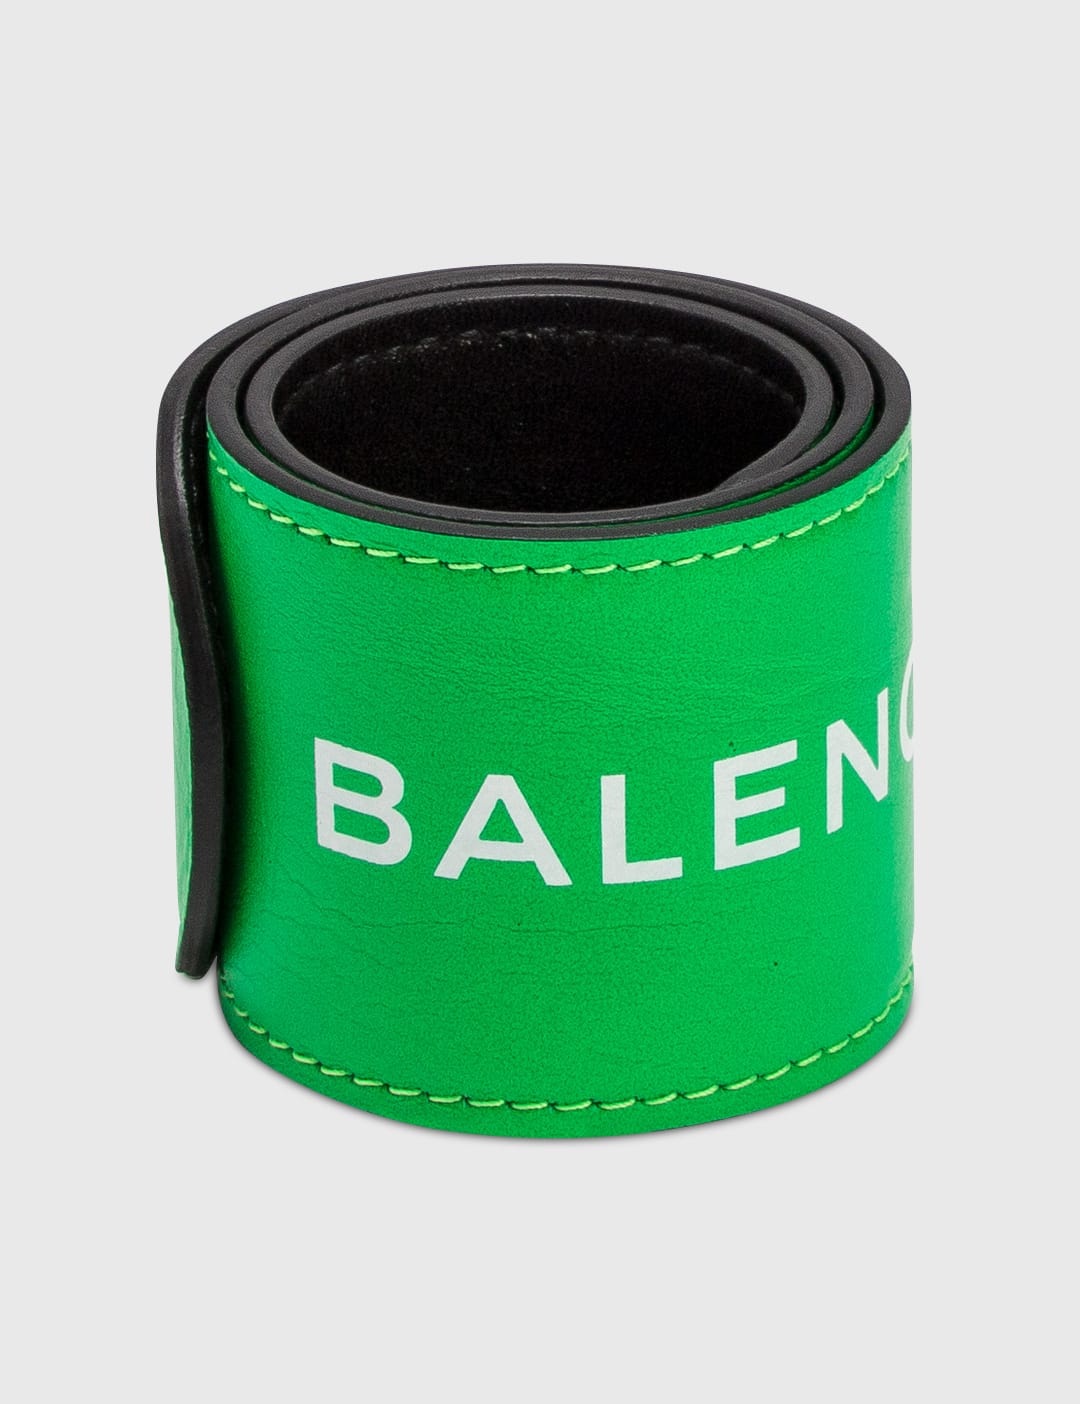 Balenciaga Bracelet Logo Cycle 469170 Black Leather 395cm Free Shipping   eBay